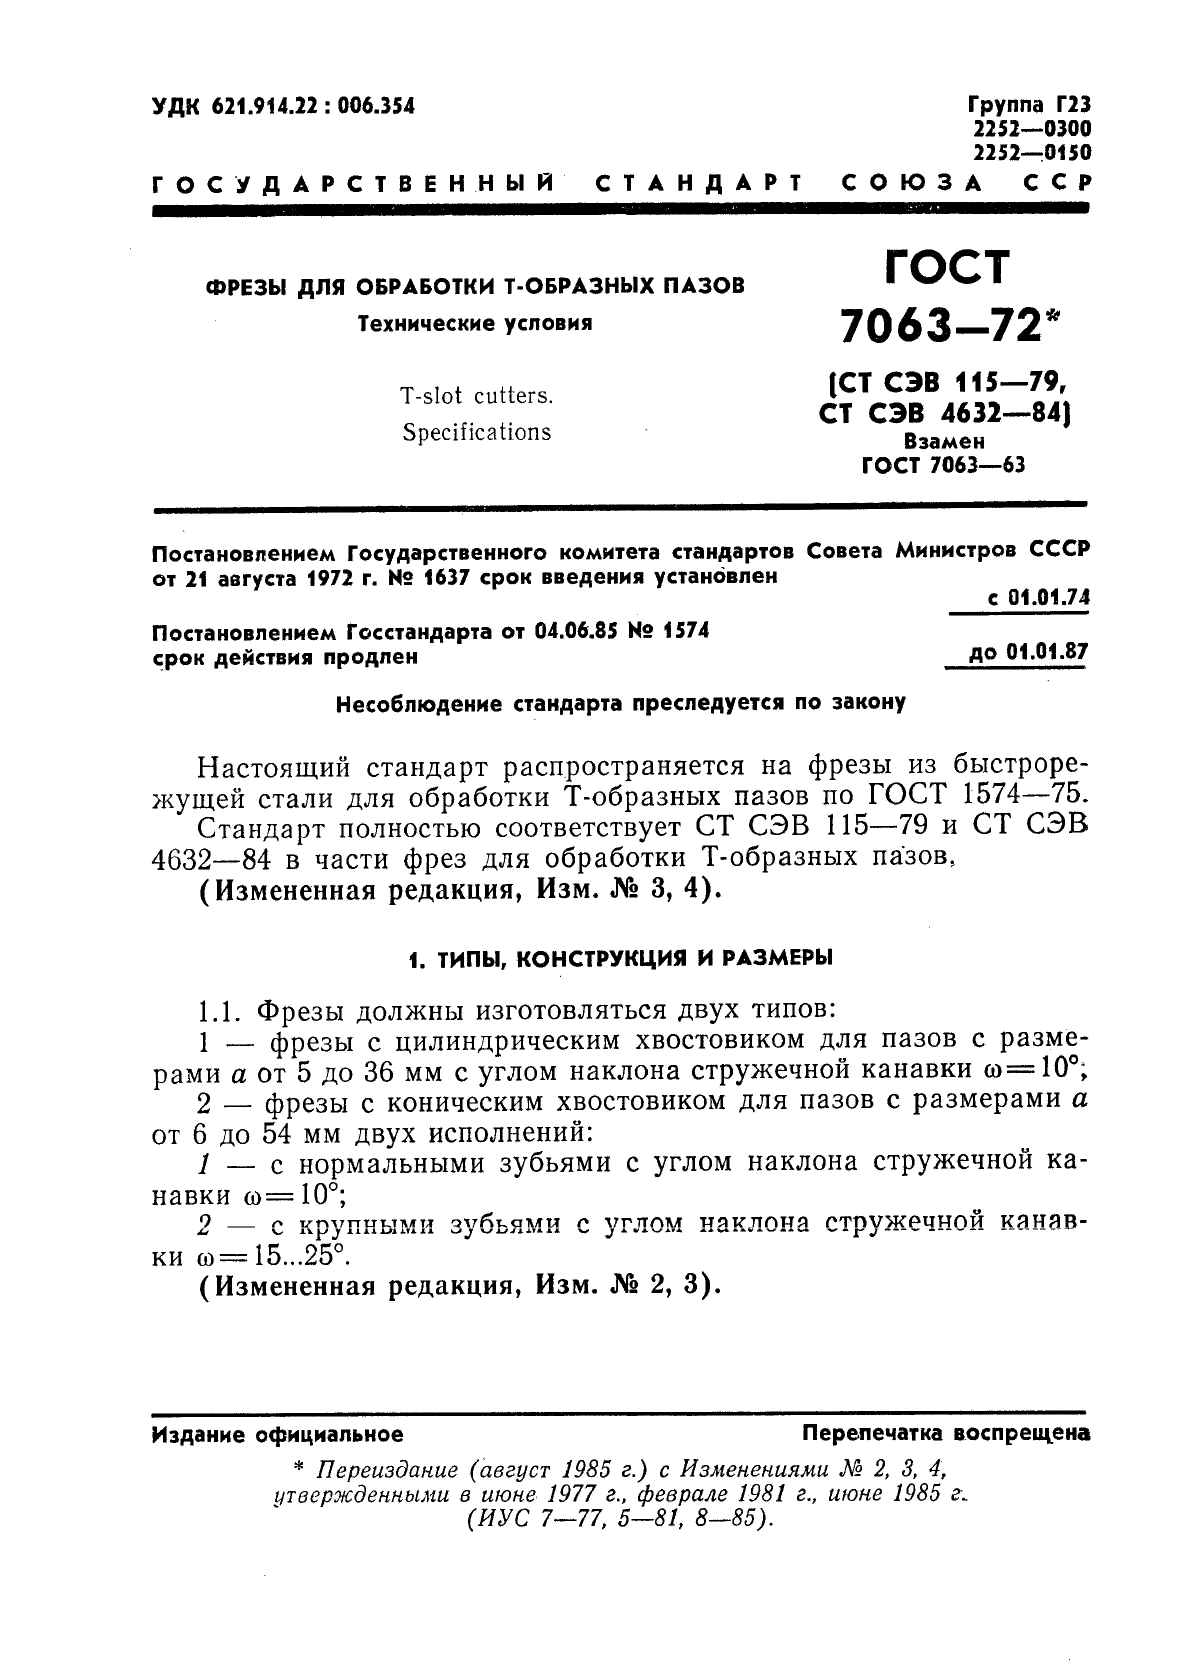 ГОСТ 7063-72